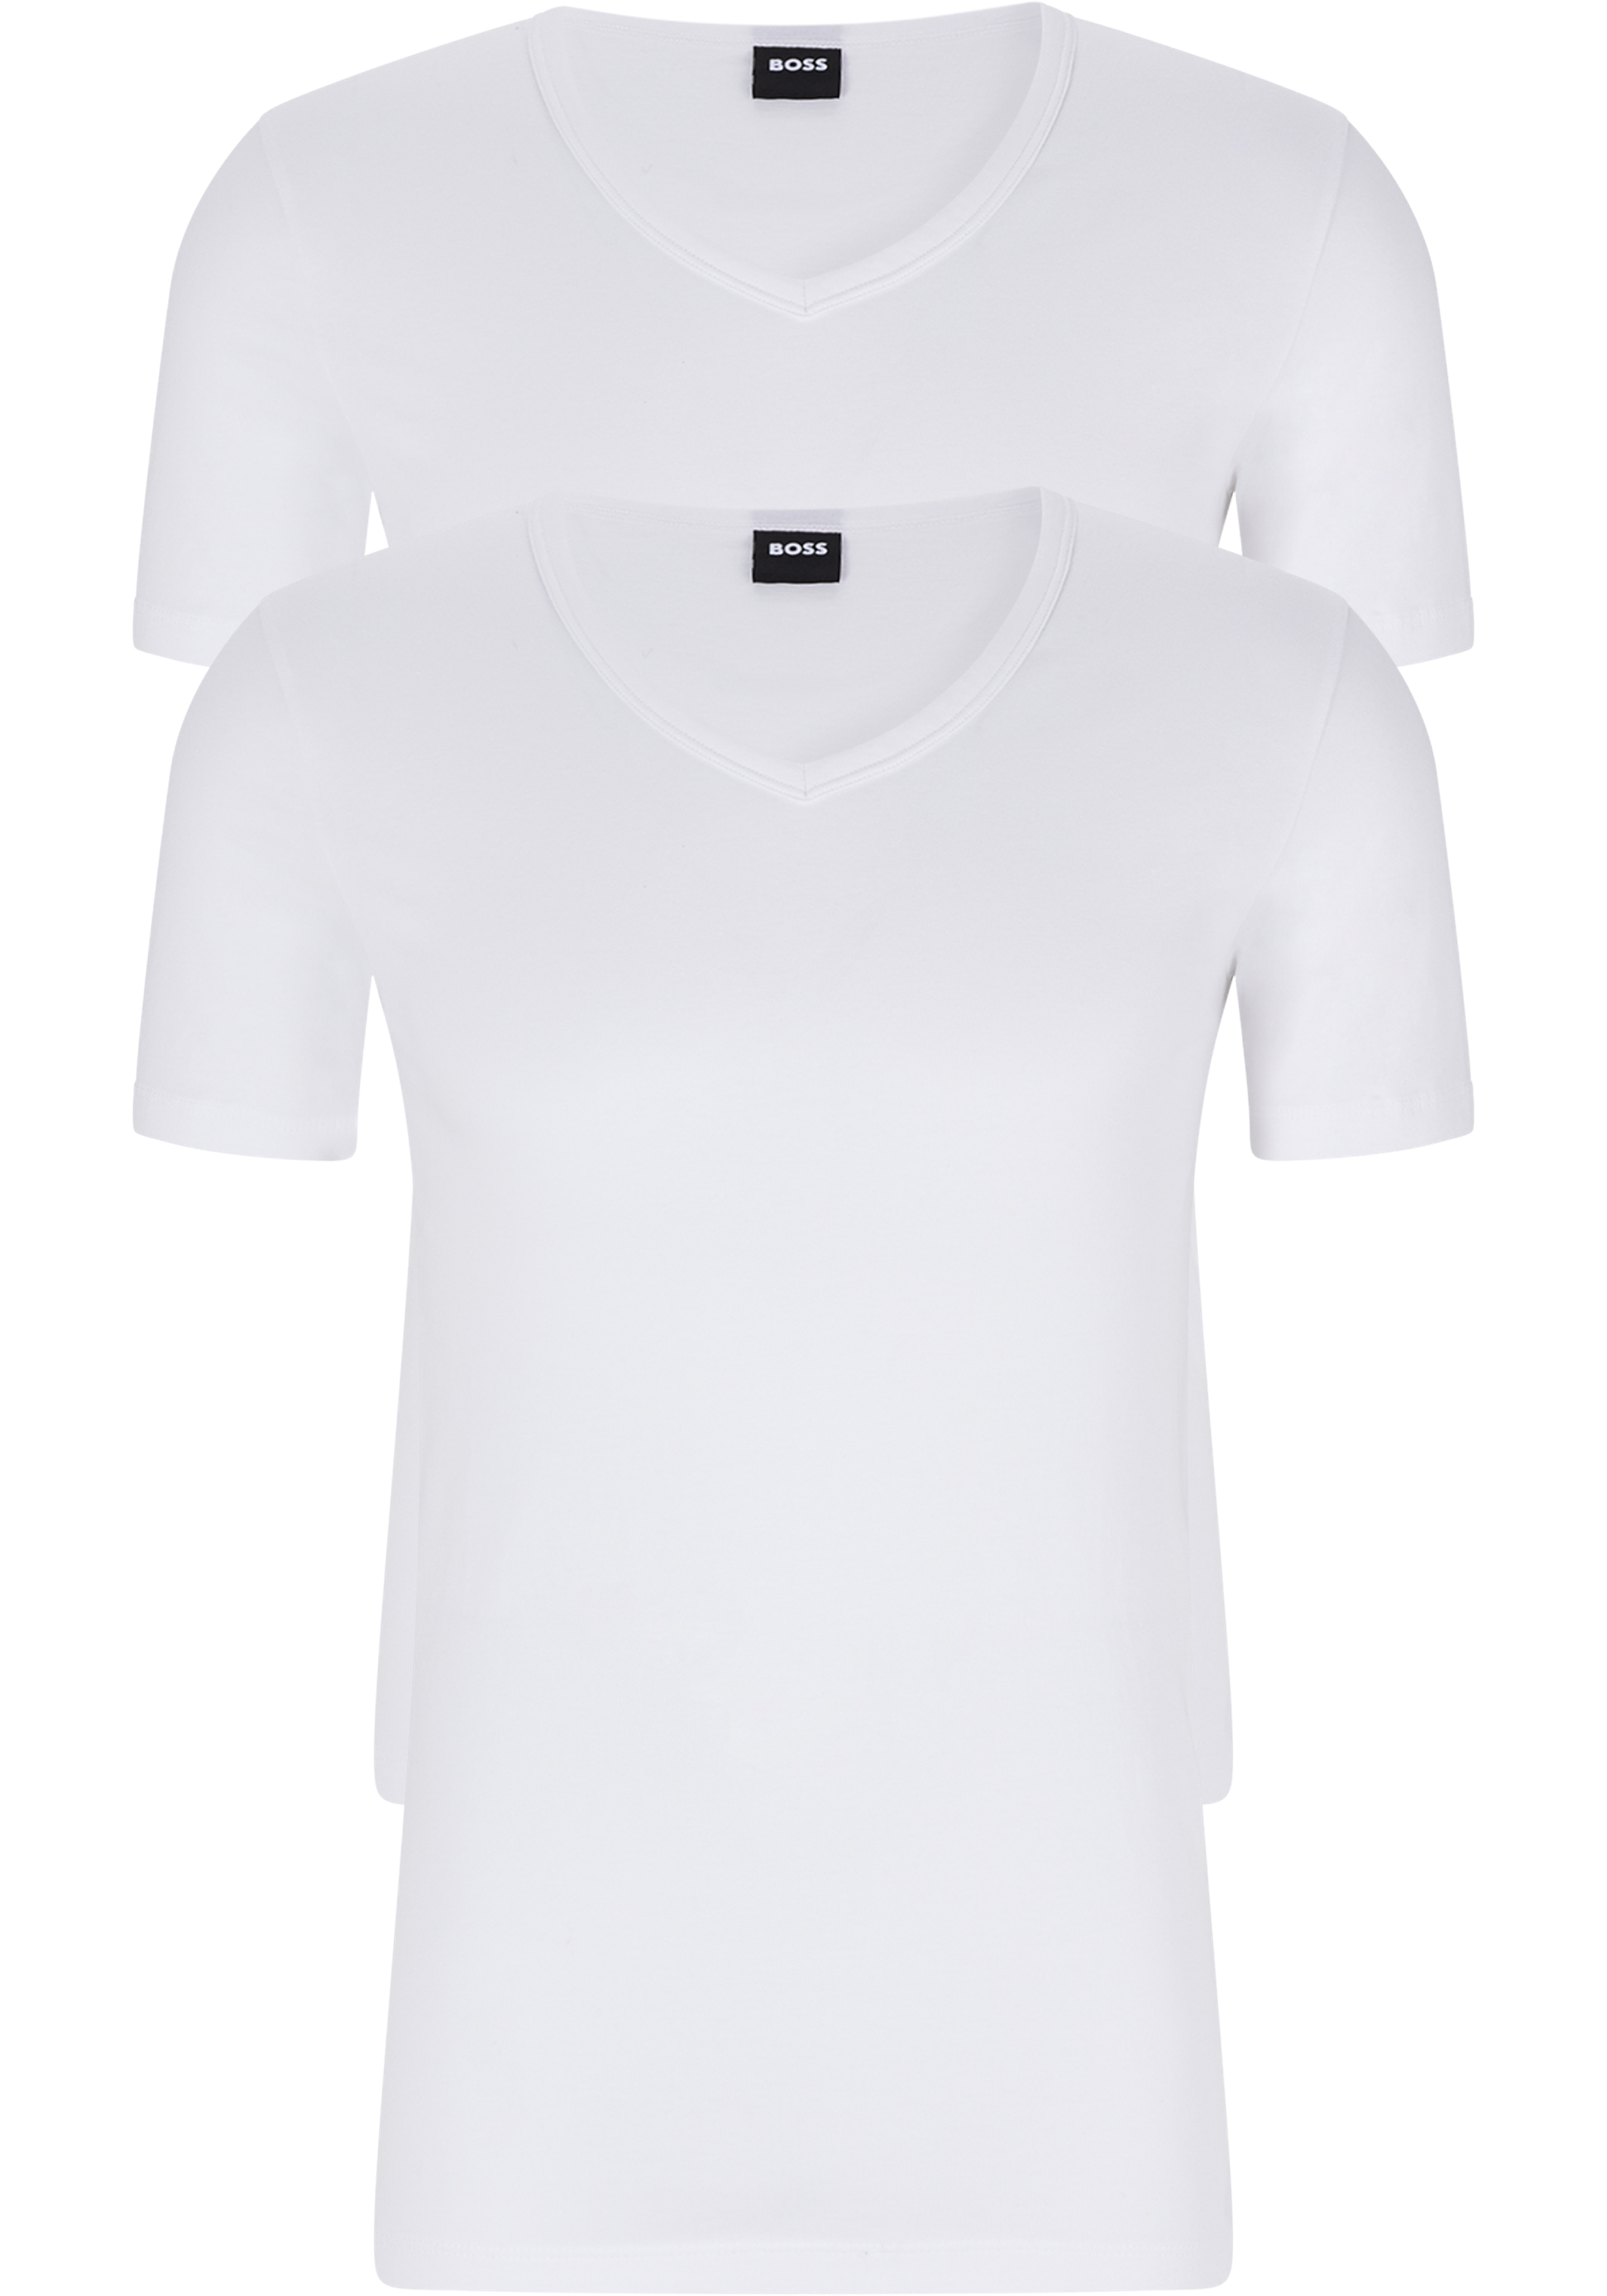 Subsidie wereld Korea HUGO BOSS Modern stretch T-shirts slim fit (2-pack), heren T-shirts... -  Zomer SALE tot 50% korting